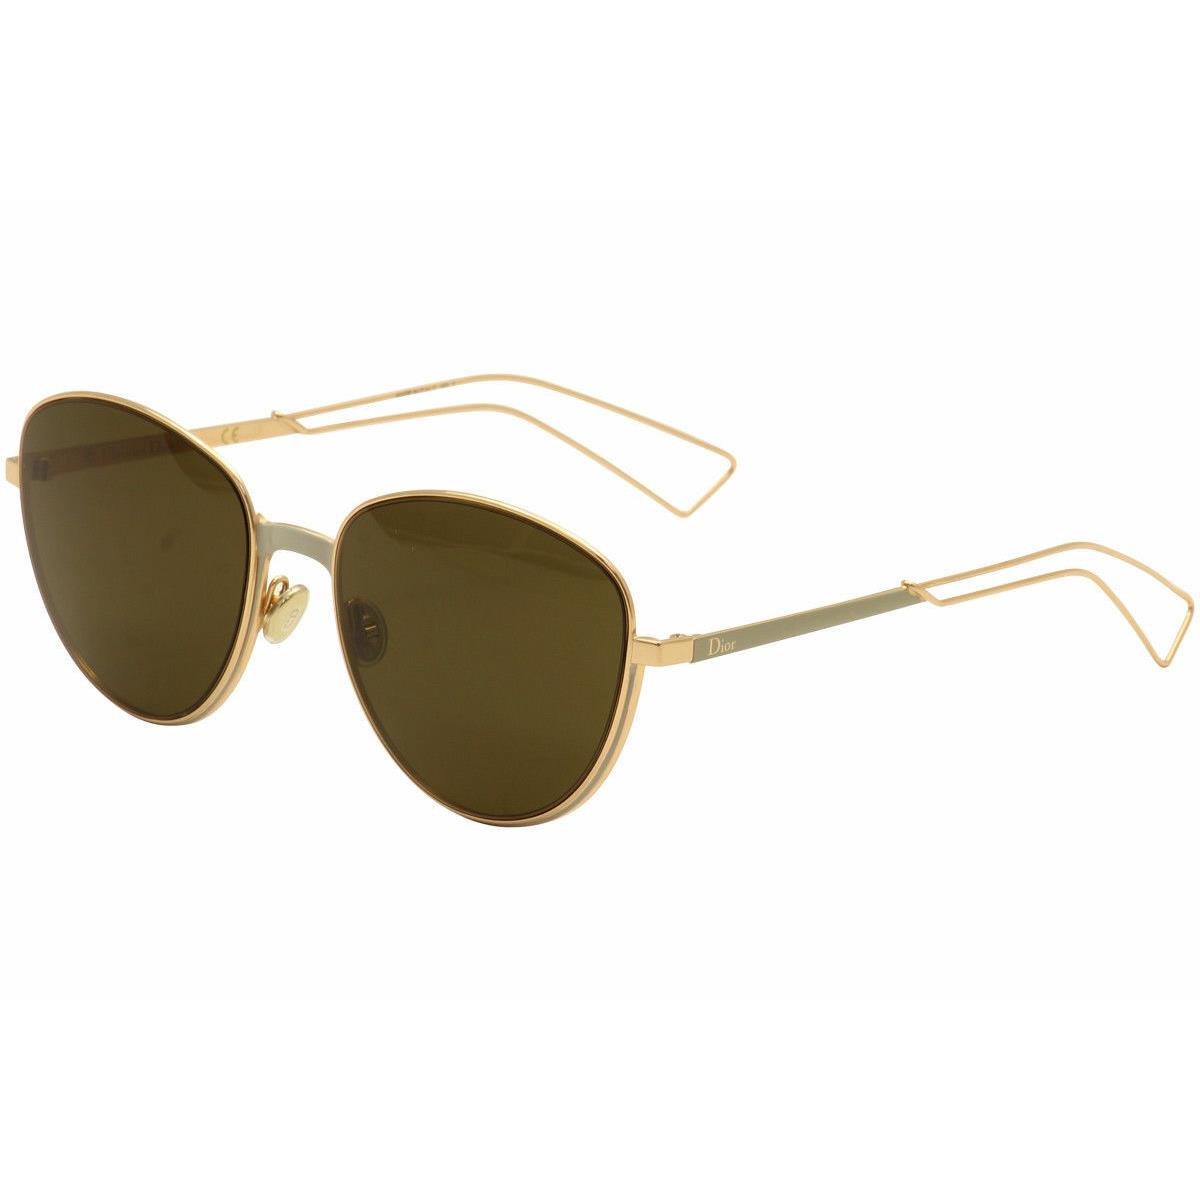 Dior sunglasses ULTRASRCXEC - Gray , Gold/ Matte Gray Frame, Brown Lens 4